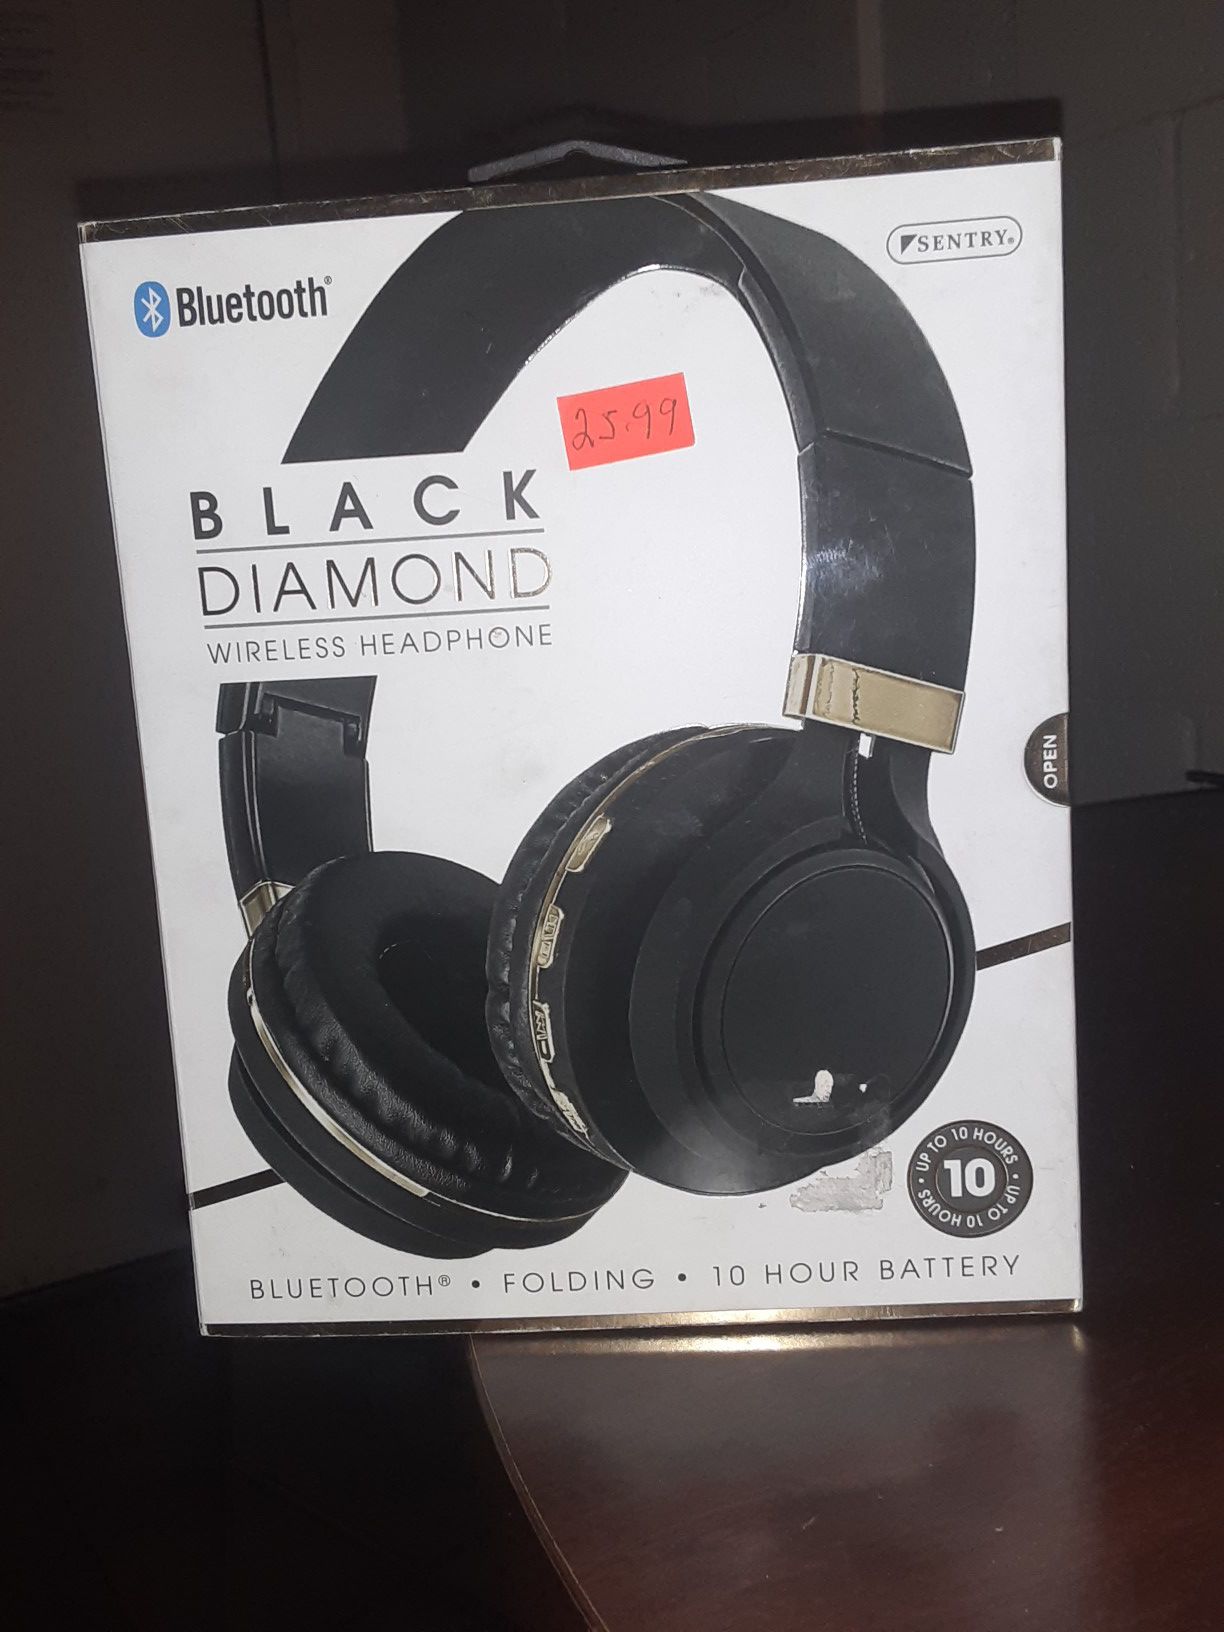 Black Diamond wireless headphones